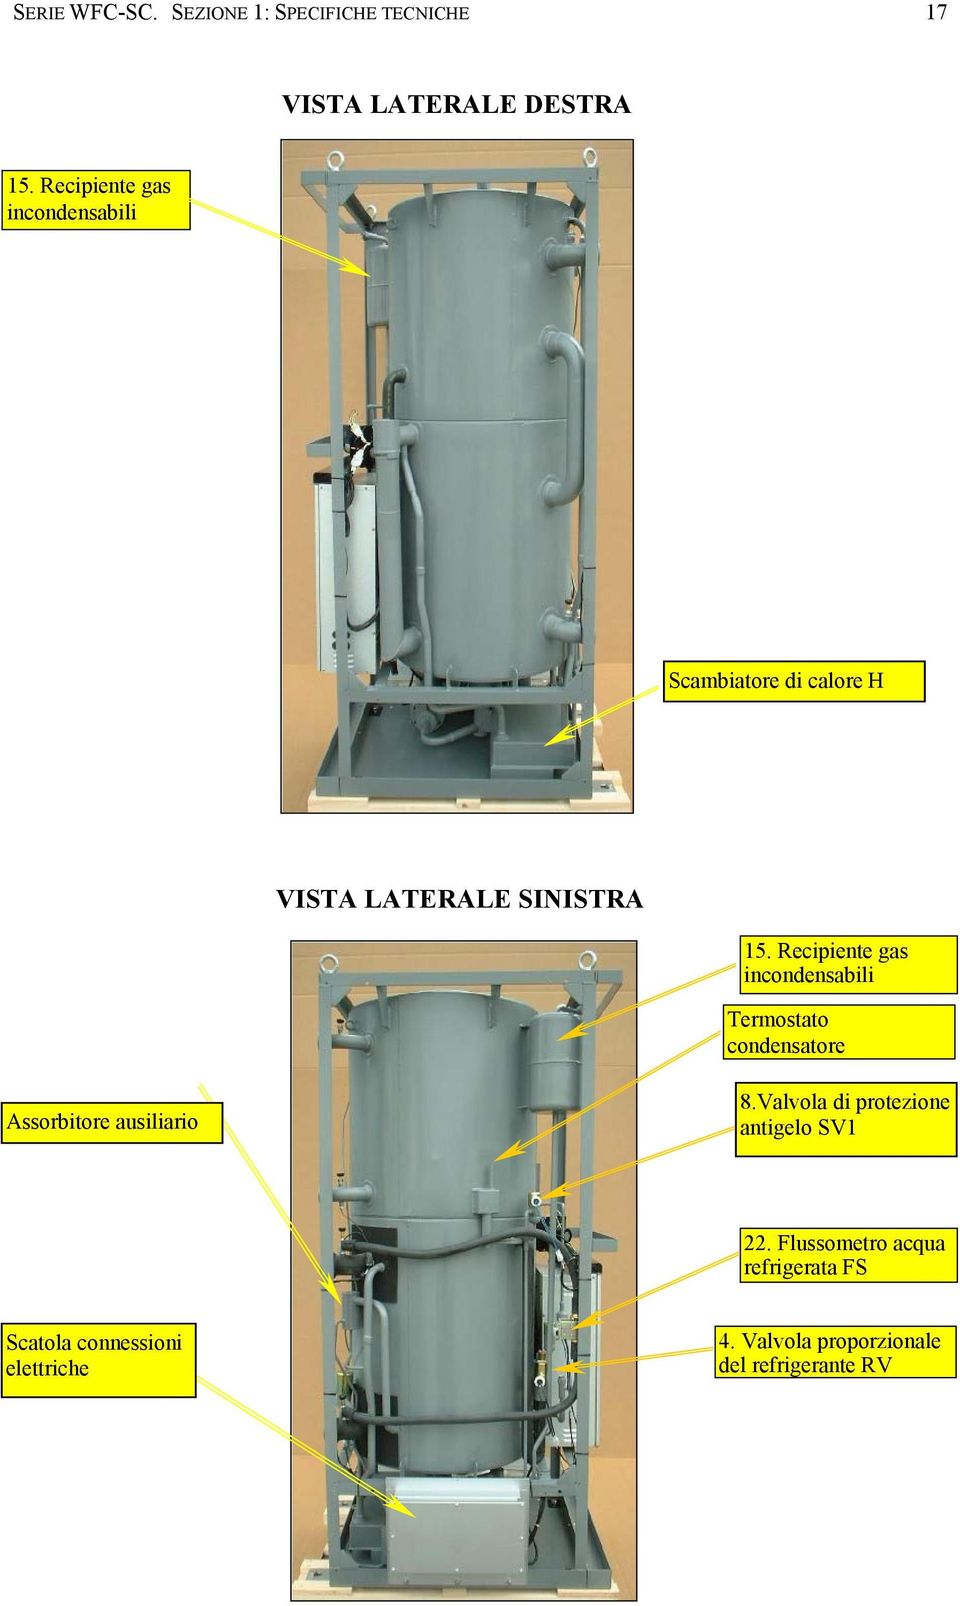 Recipiente gas incondensabili Termostato condensatore Assorbitore ausiliario 8.Valvola 8.